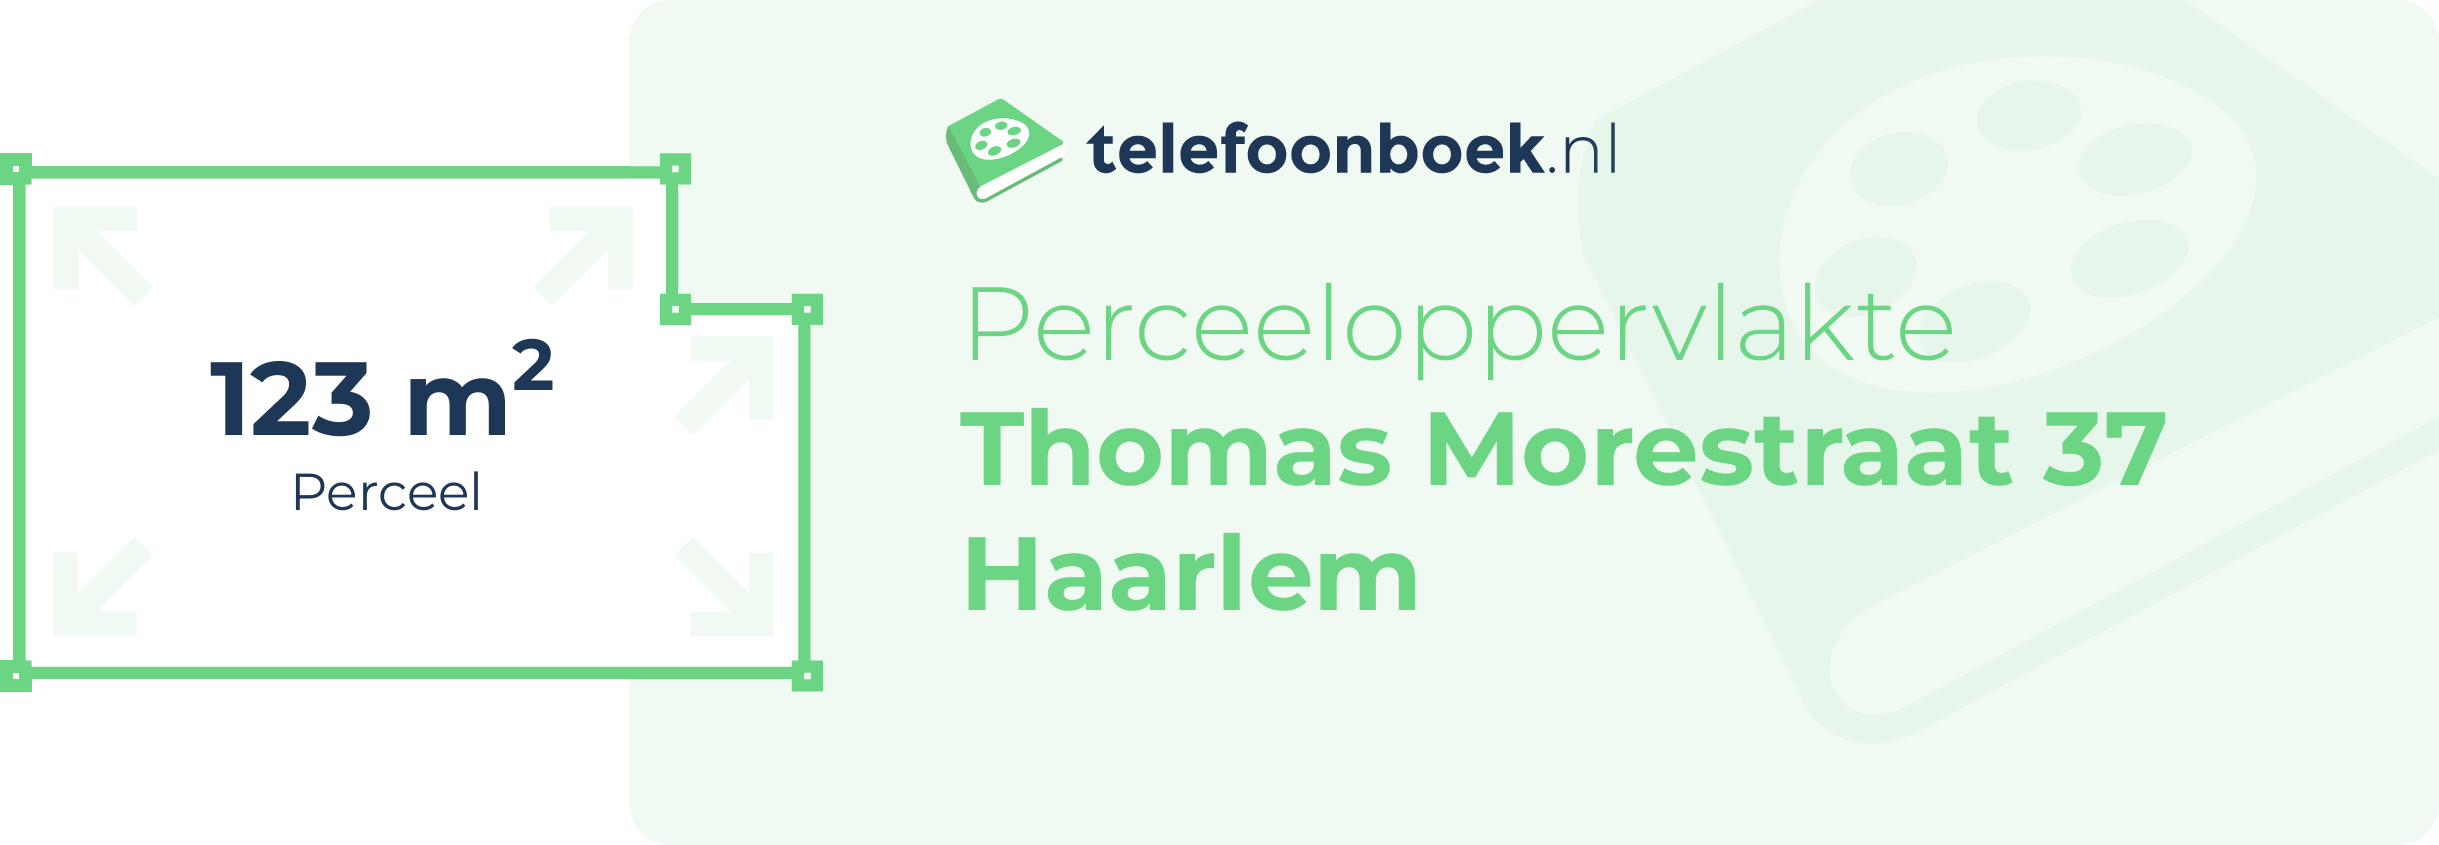 Perceeloppervlakte Thomas Morestraat 37 Haarlem